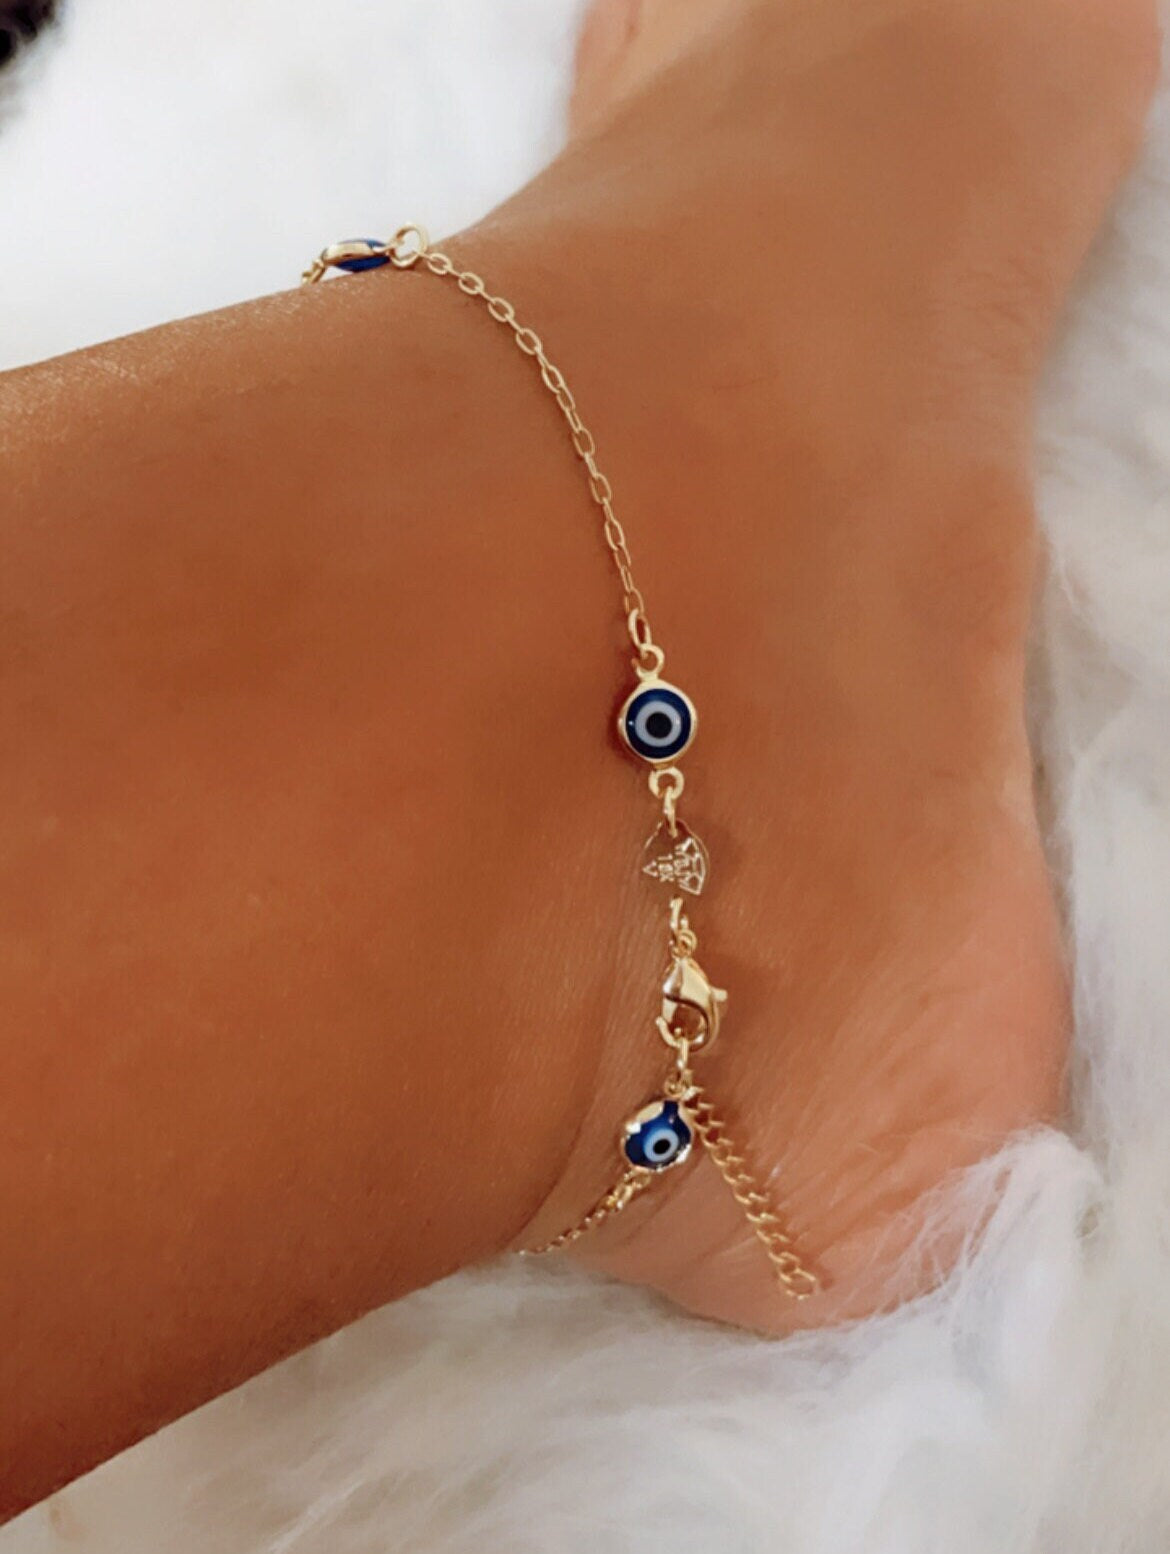 Amazon.com: Lotus anklet, blue ankle bracelet with silver lotus charm,  buddhist symbol, blue cord, zen, flower, yoga bracelet, spiritual jewelry,  flower : Handmade Products